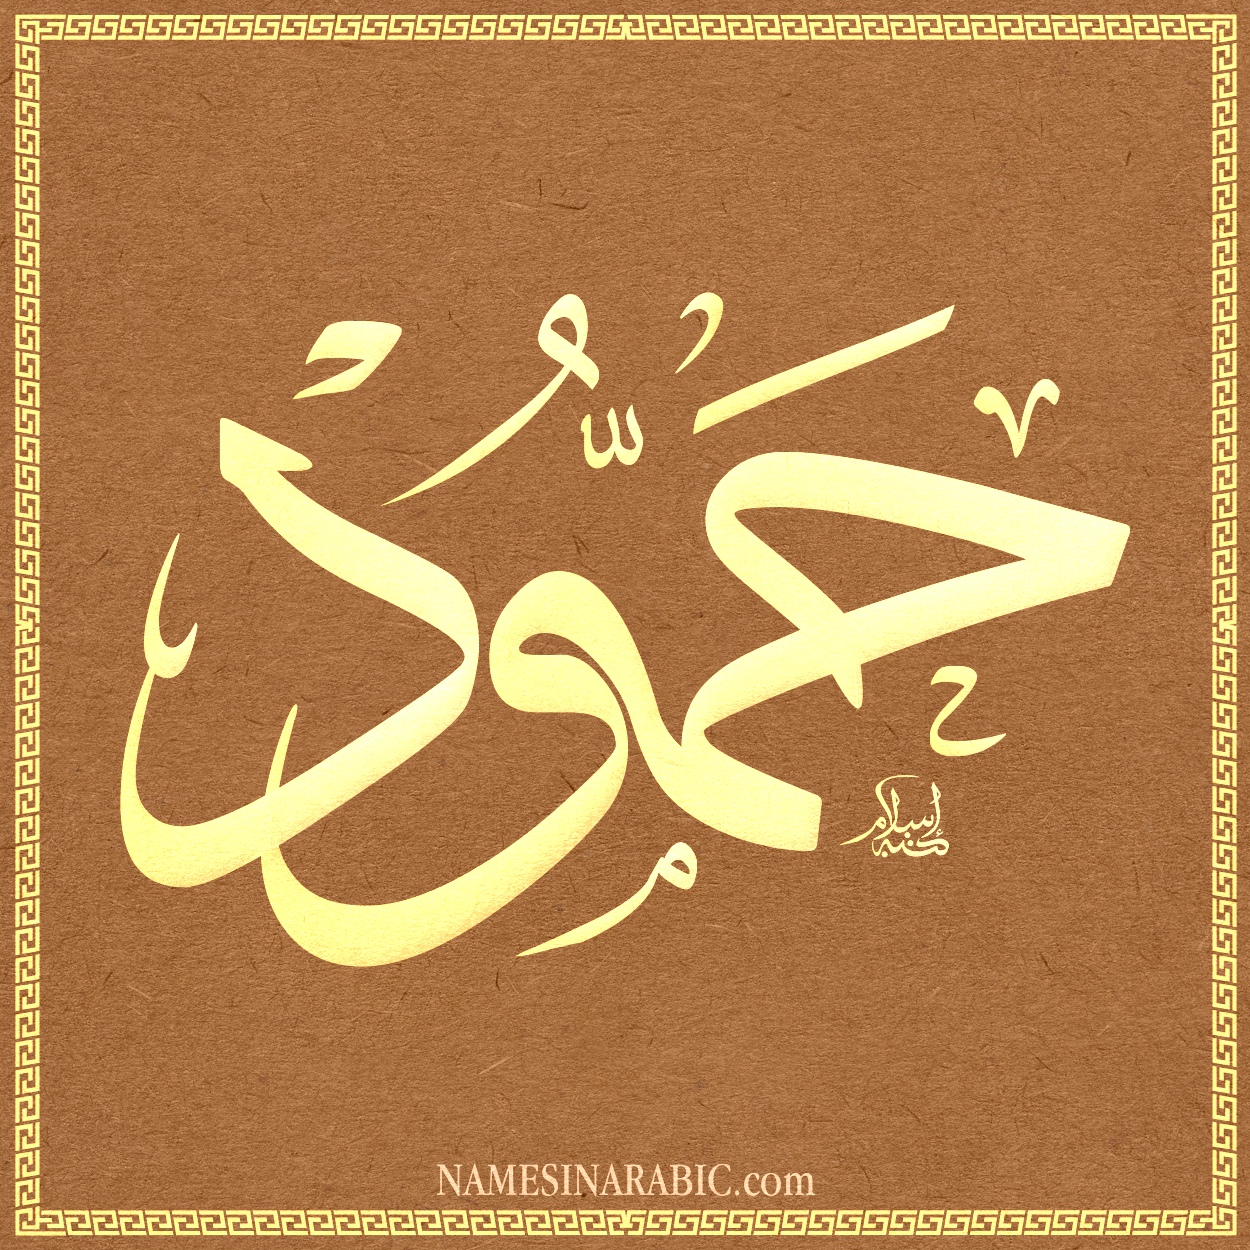 Hamood-Name-in-Arabic-Thuluth-Calligraphy.jpg